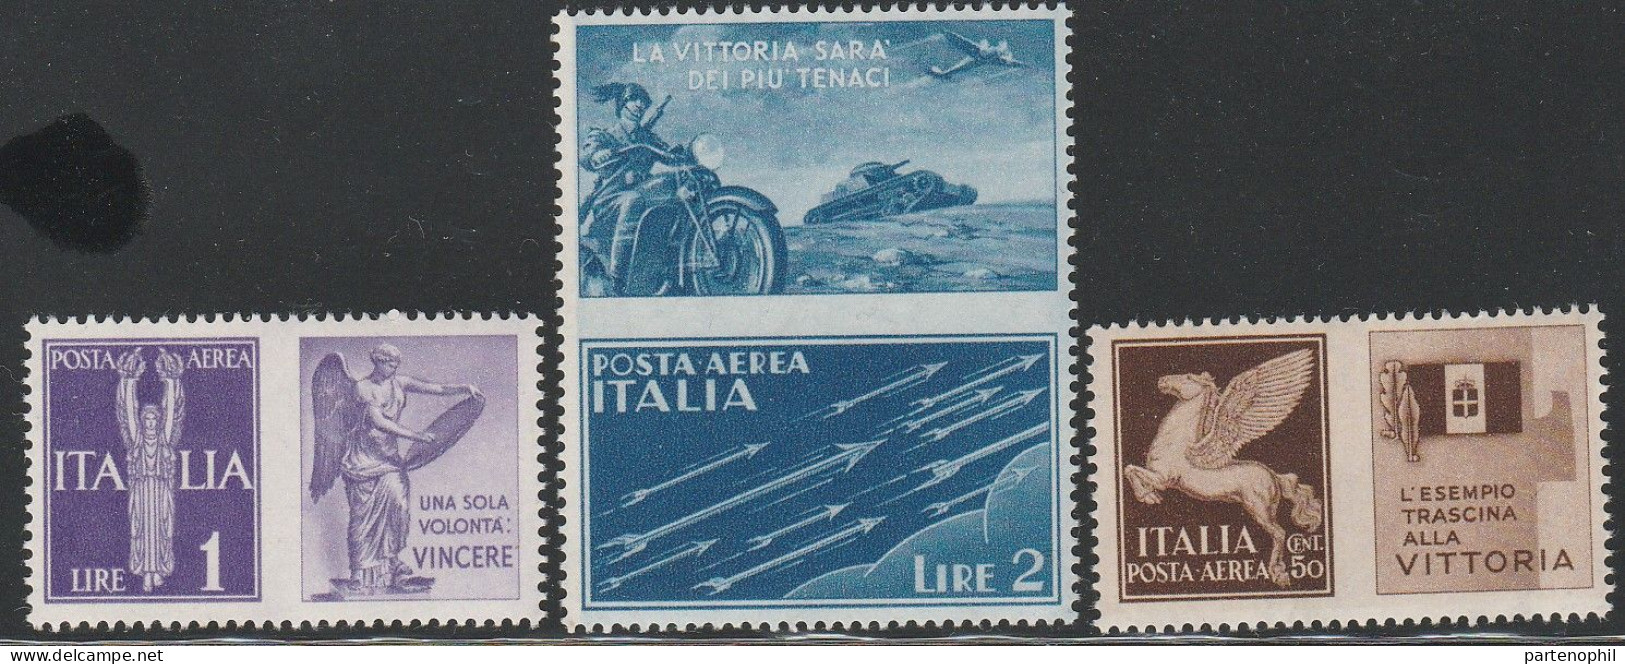 155 Italia Regno - Propaganda Di Guerra - 1942 - Francobolli Di Posta Aerea Con Appendici Di Propaganda Bellica N. 12A/A - Oorlogspropaganda